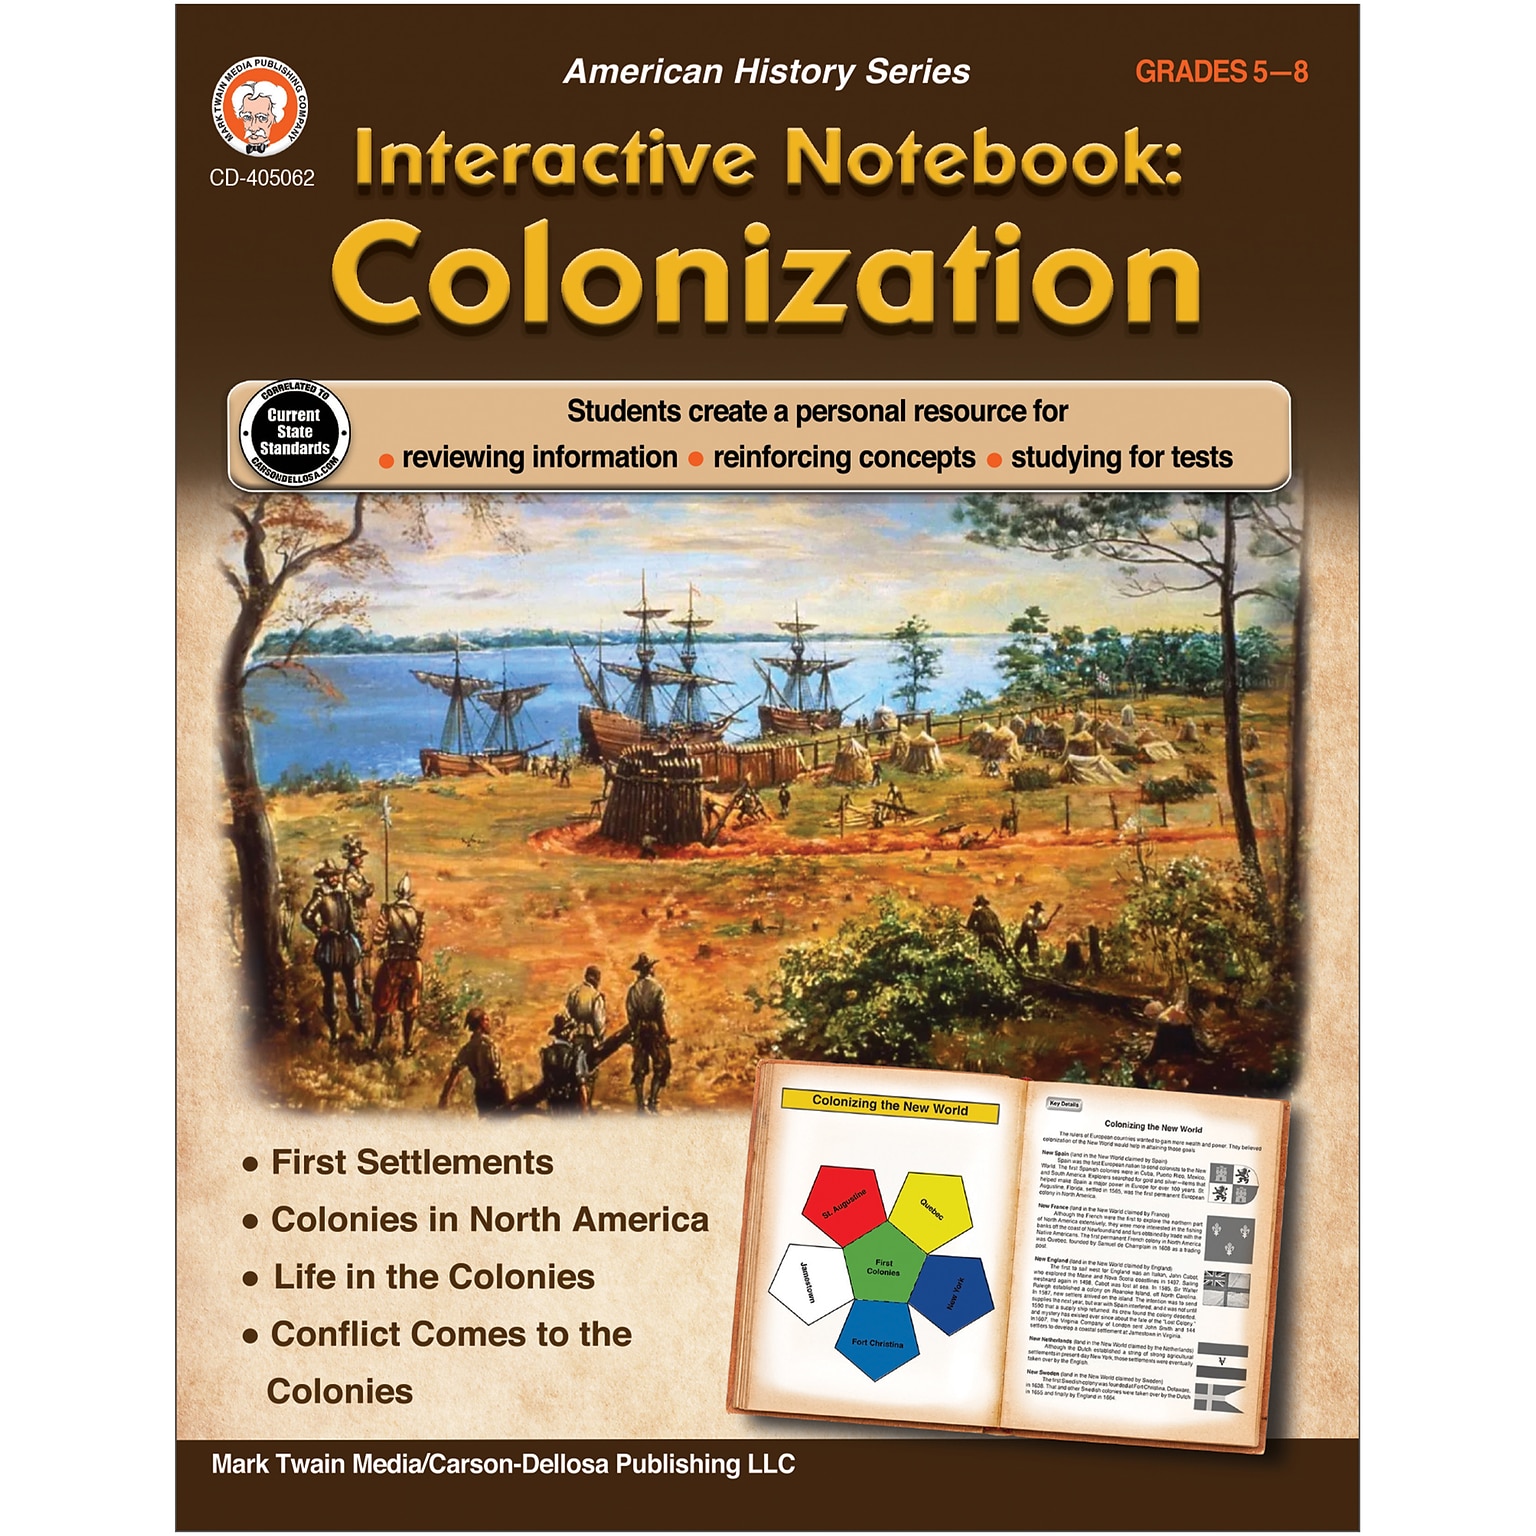 Interactive Notebook: Colonization Resource Book, Grade 5-8 by Mark Twain Media, Paperback (9781622238477)